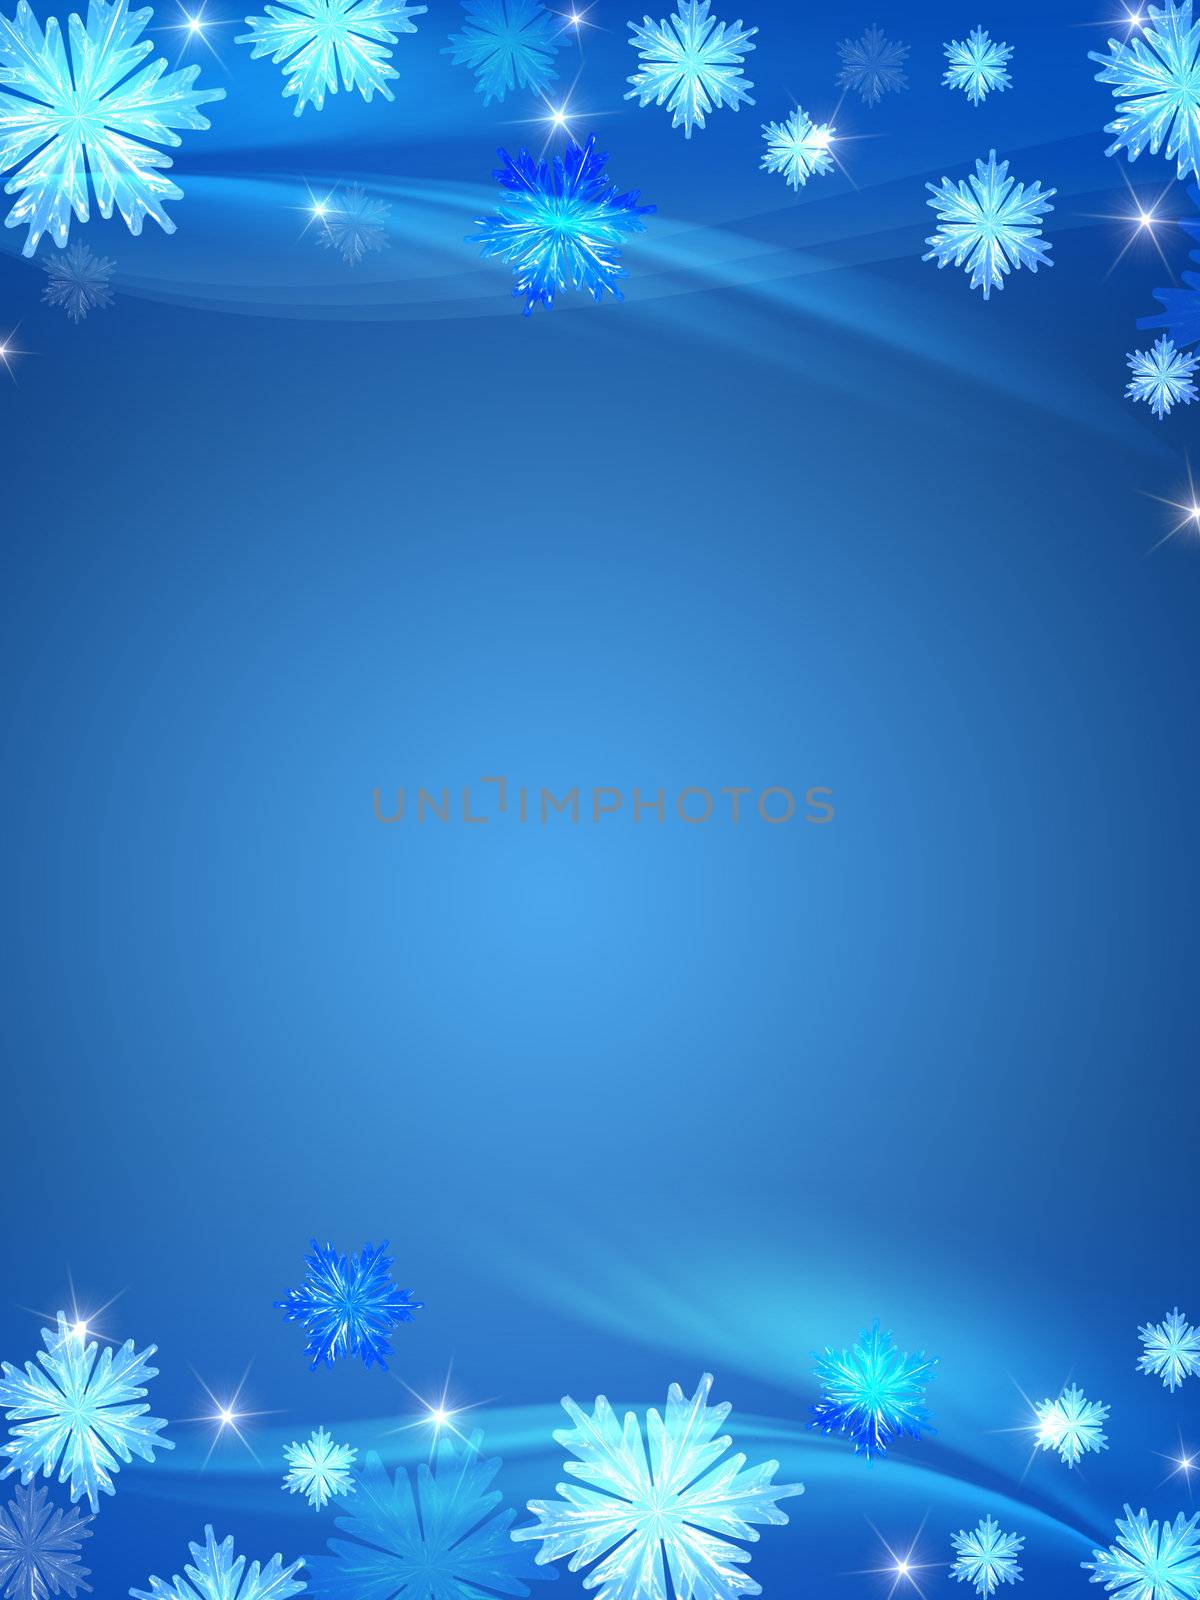 crystal snowflakes blue background by marinini